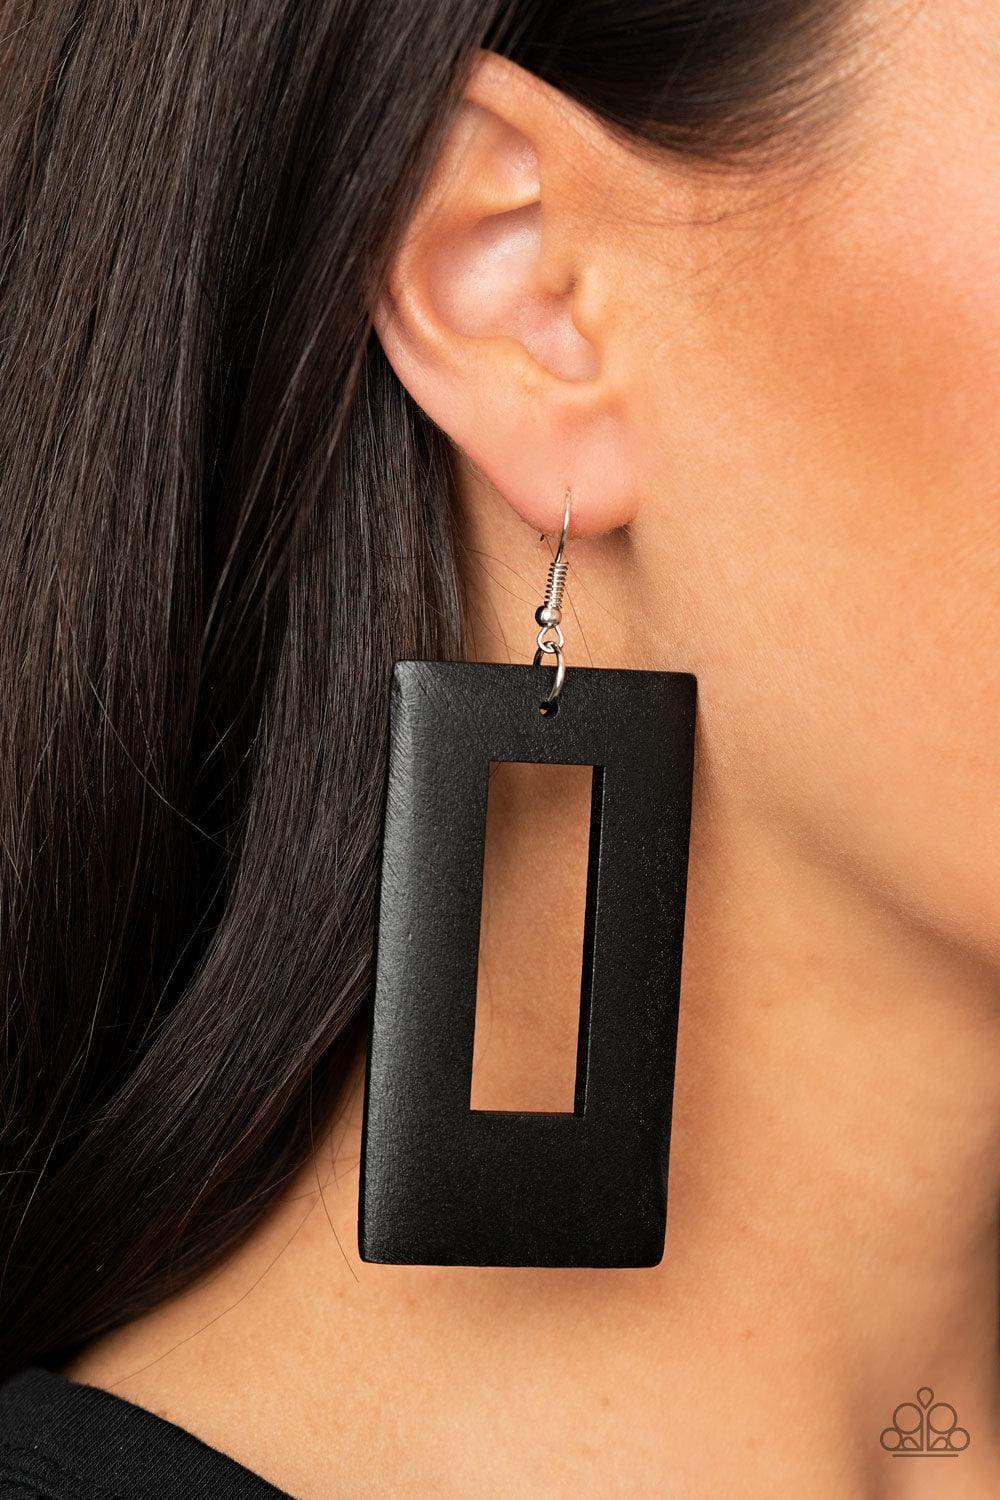 Paparazzi Accessories - Totally Framed - Black Earrings - Bling by JessieK